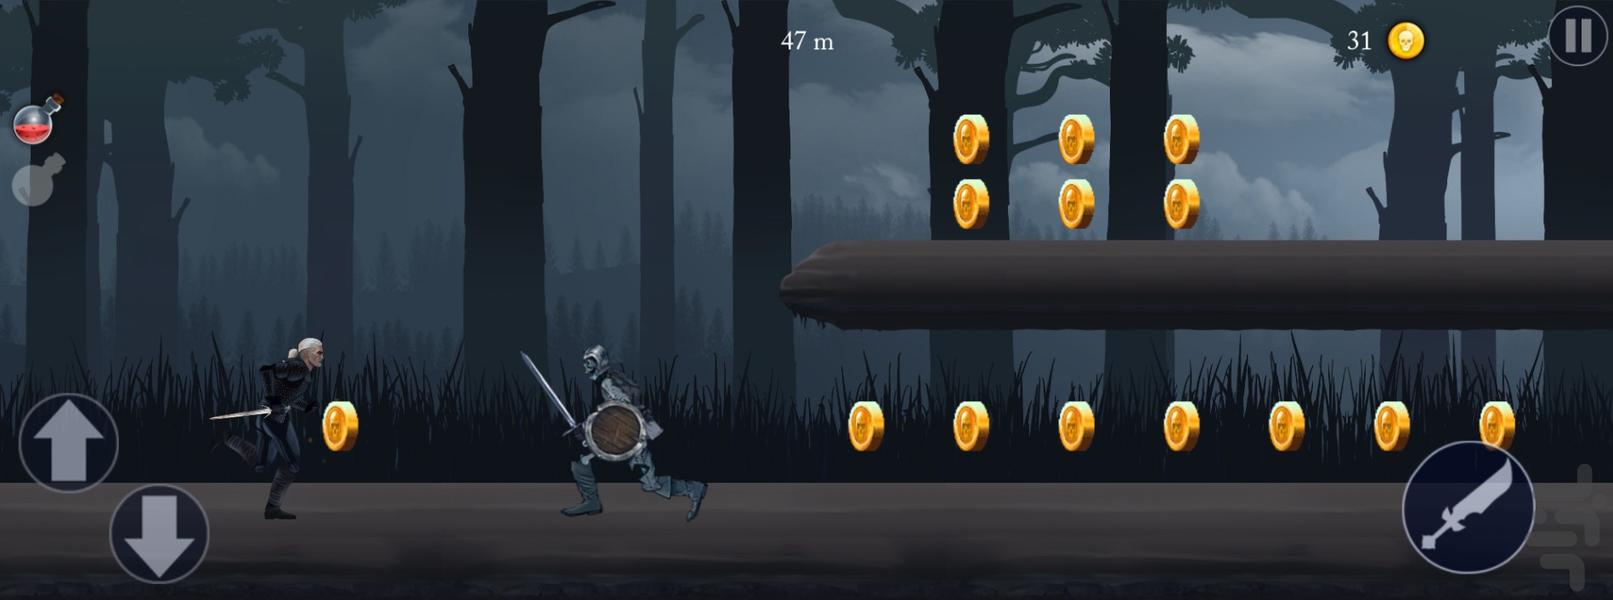 بازی شوالیه جنگجو - Gameplay image of android game